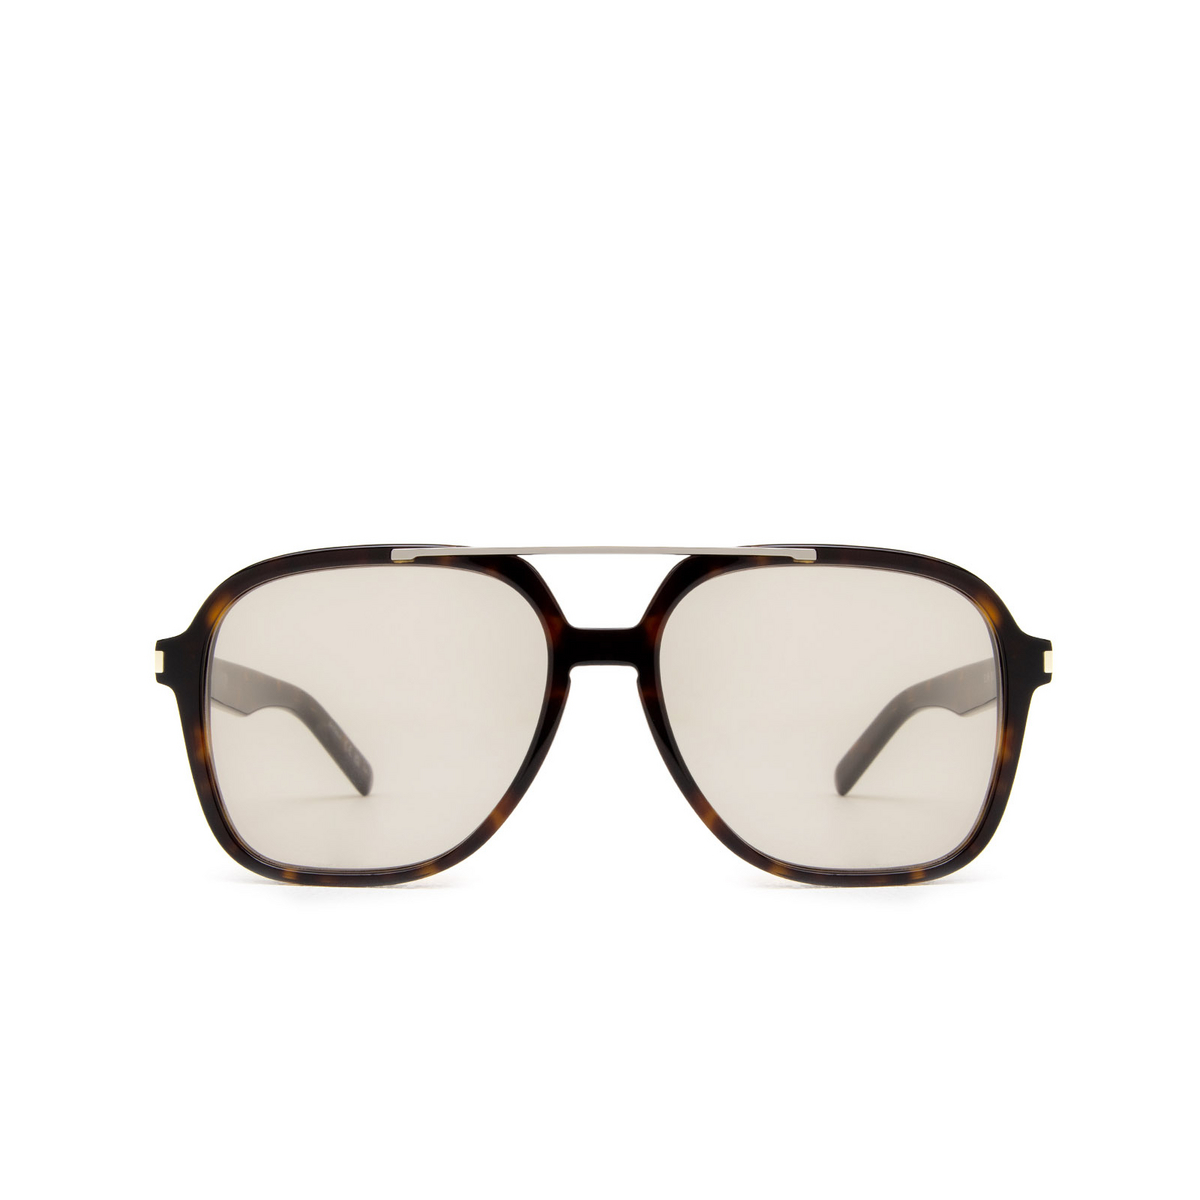 Chanel Interlocking CC Logo Oversize Sunglasses - Grey Sunglasses